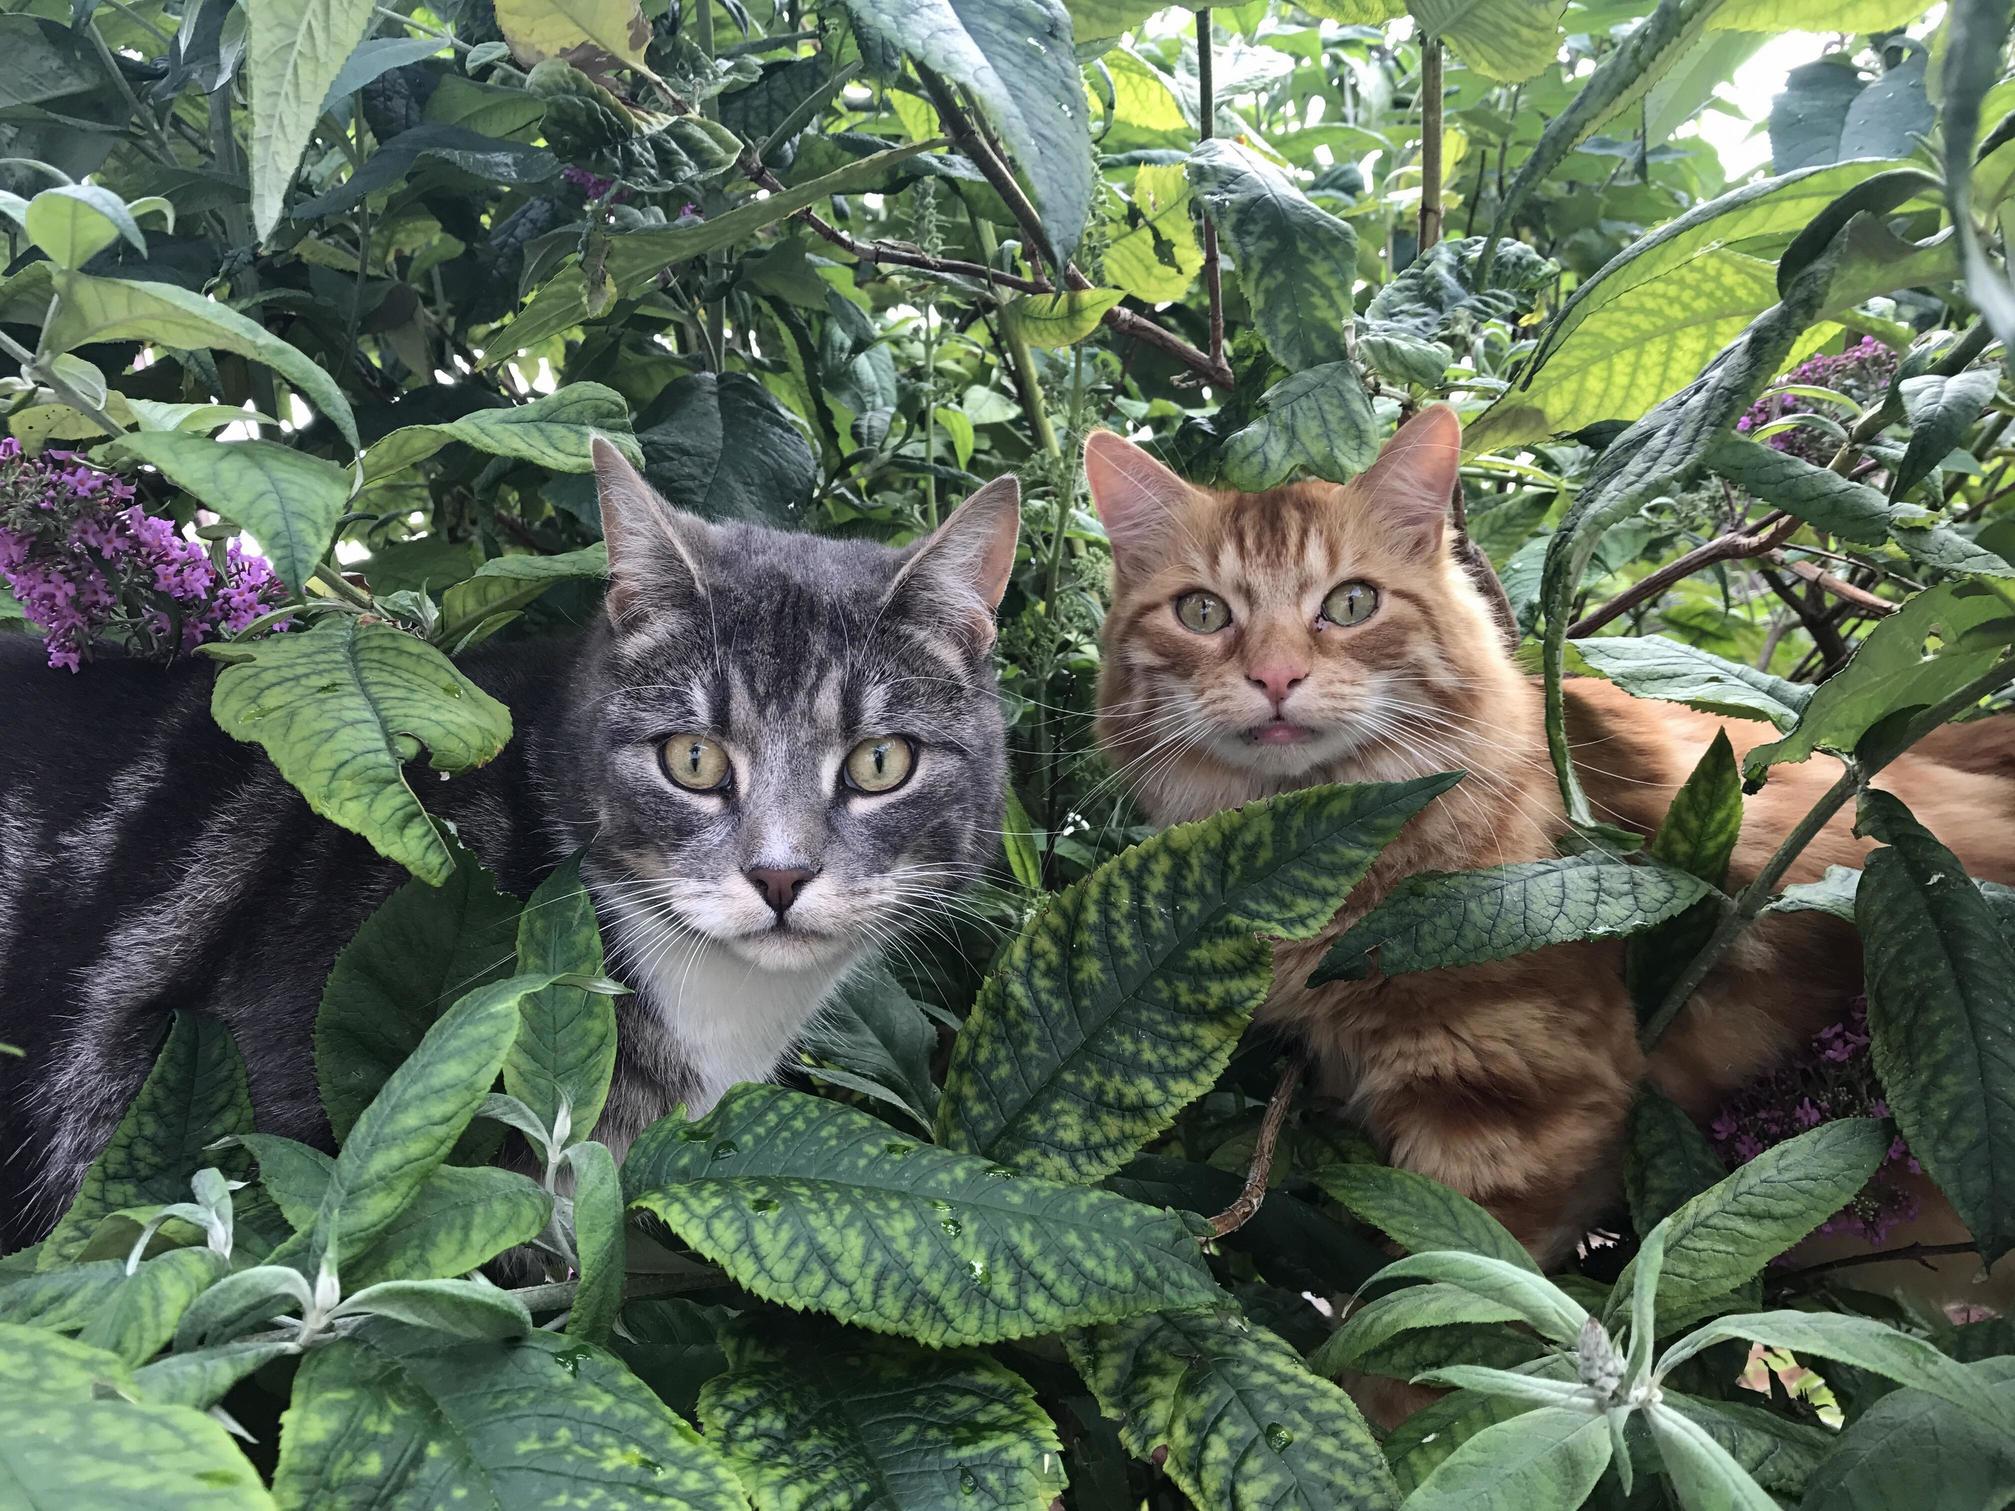 Brothers thor and loki jungle explorers.